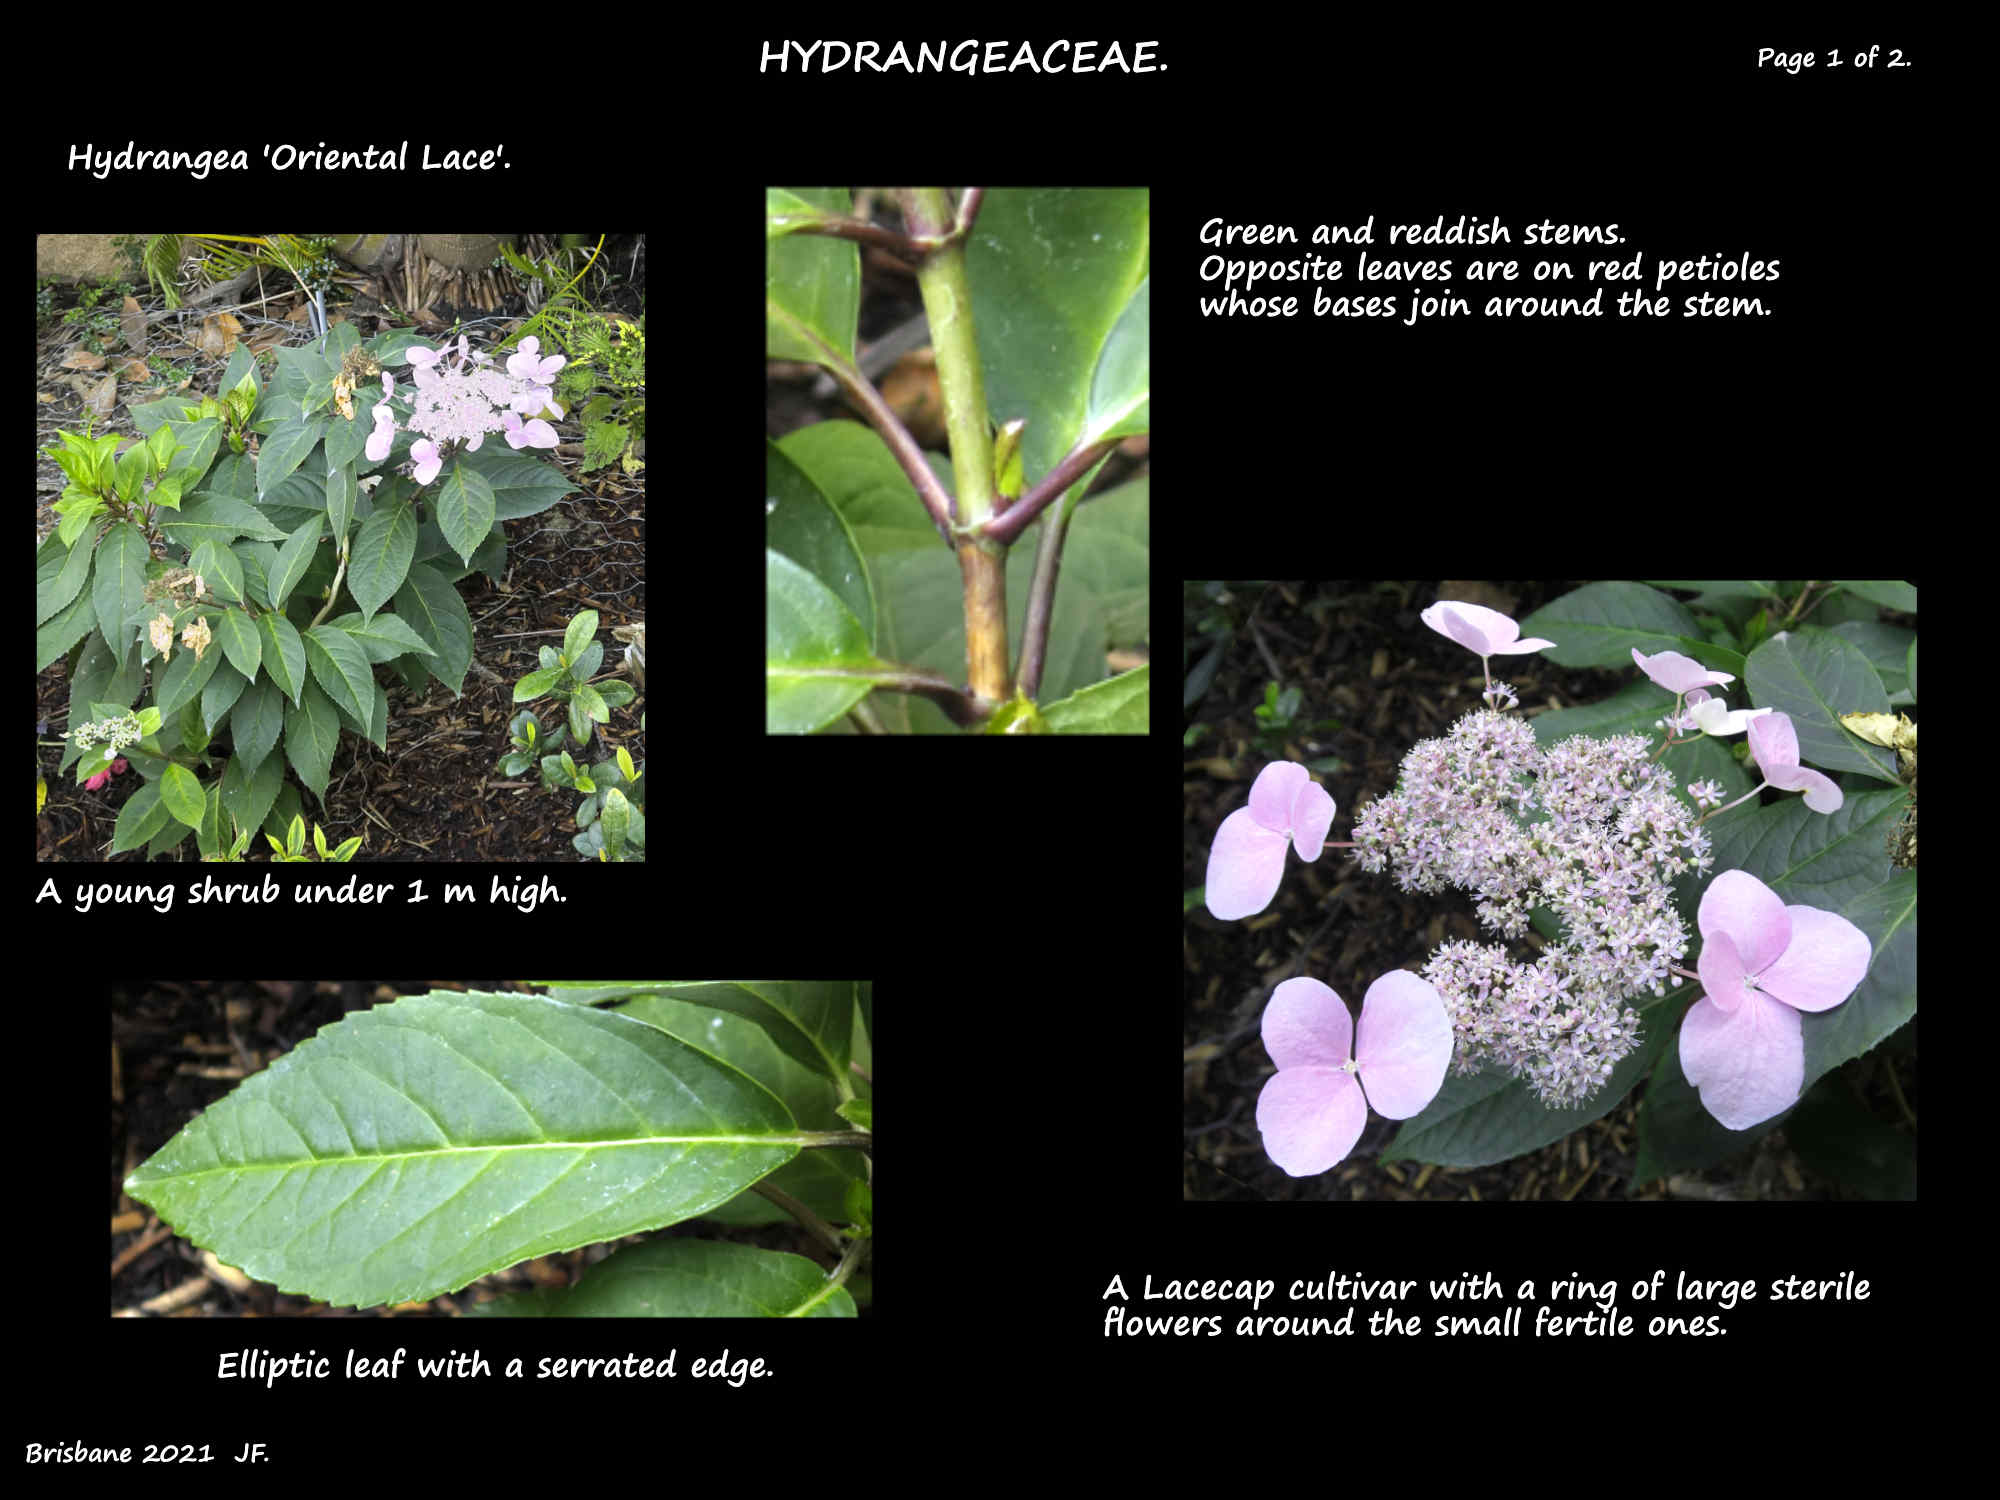 1 Hydrangea 'Oriental Lace' shrub, leaf & inflorescence